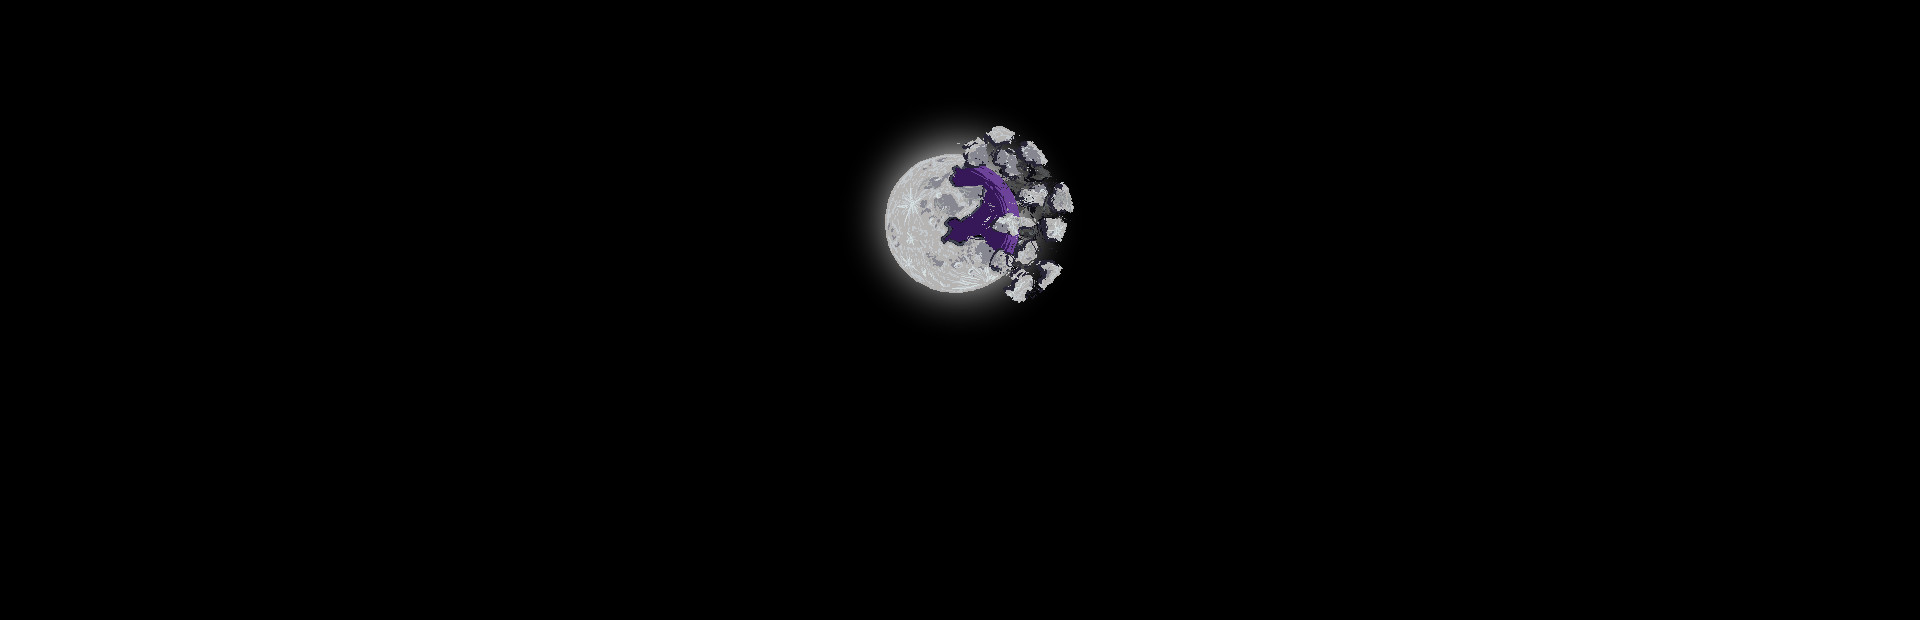 Skautfold: Moonless Knight cover image